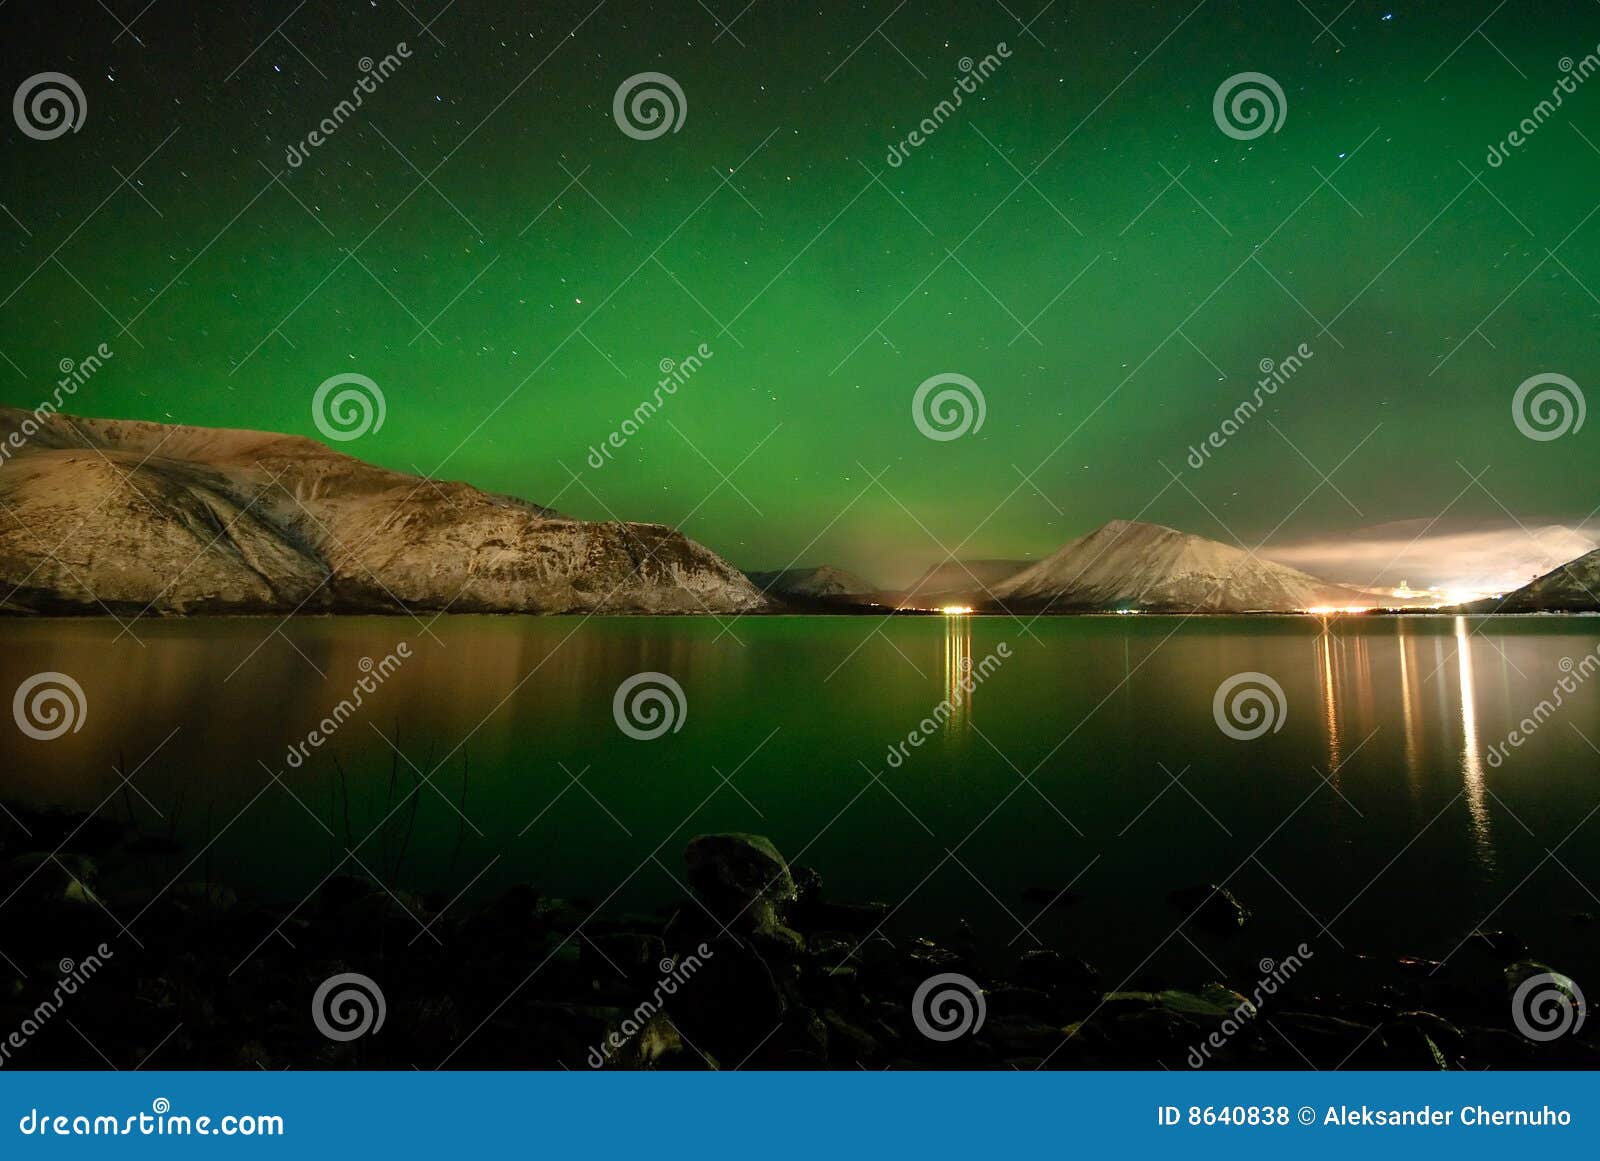 aurora polaris above a lake